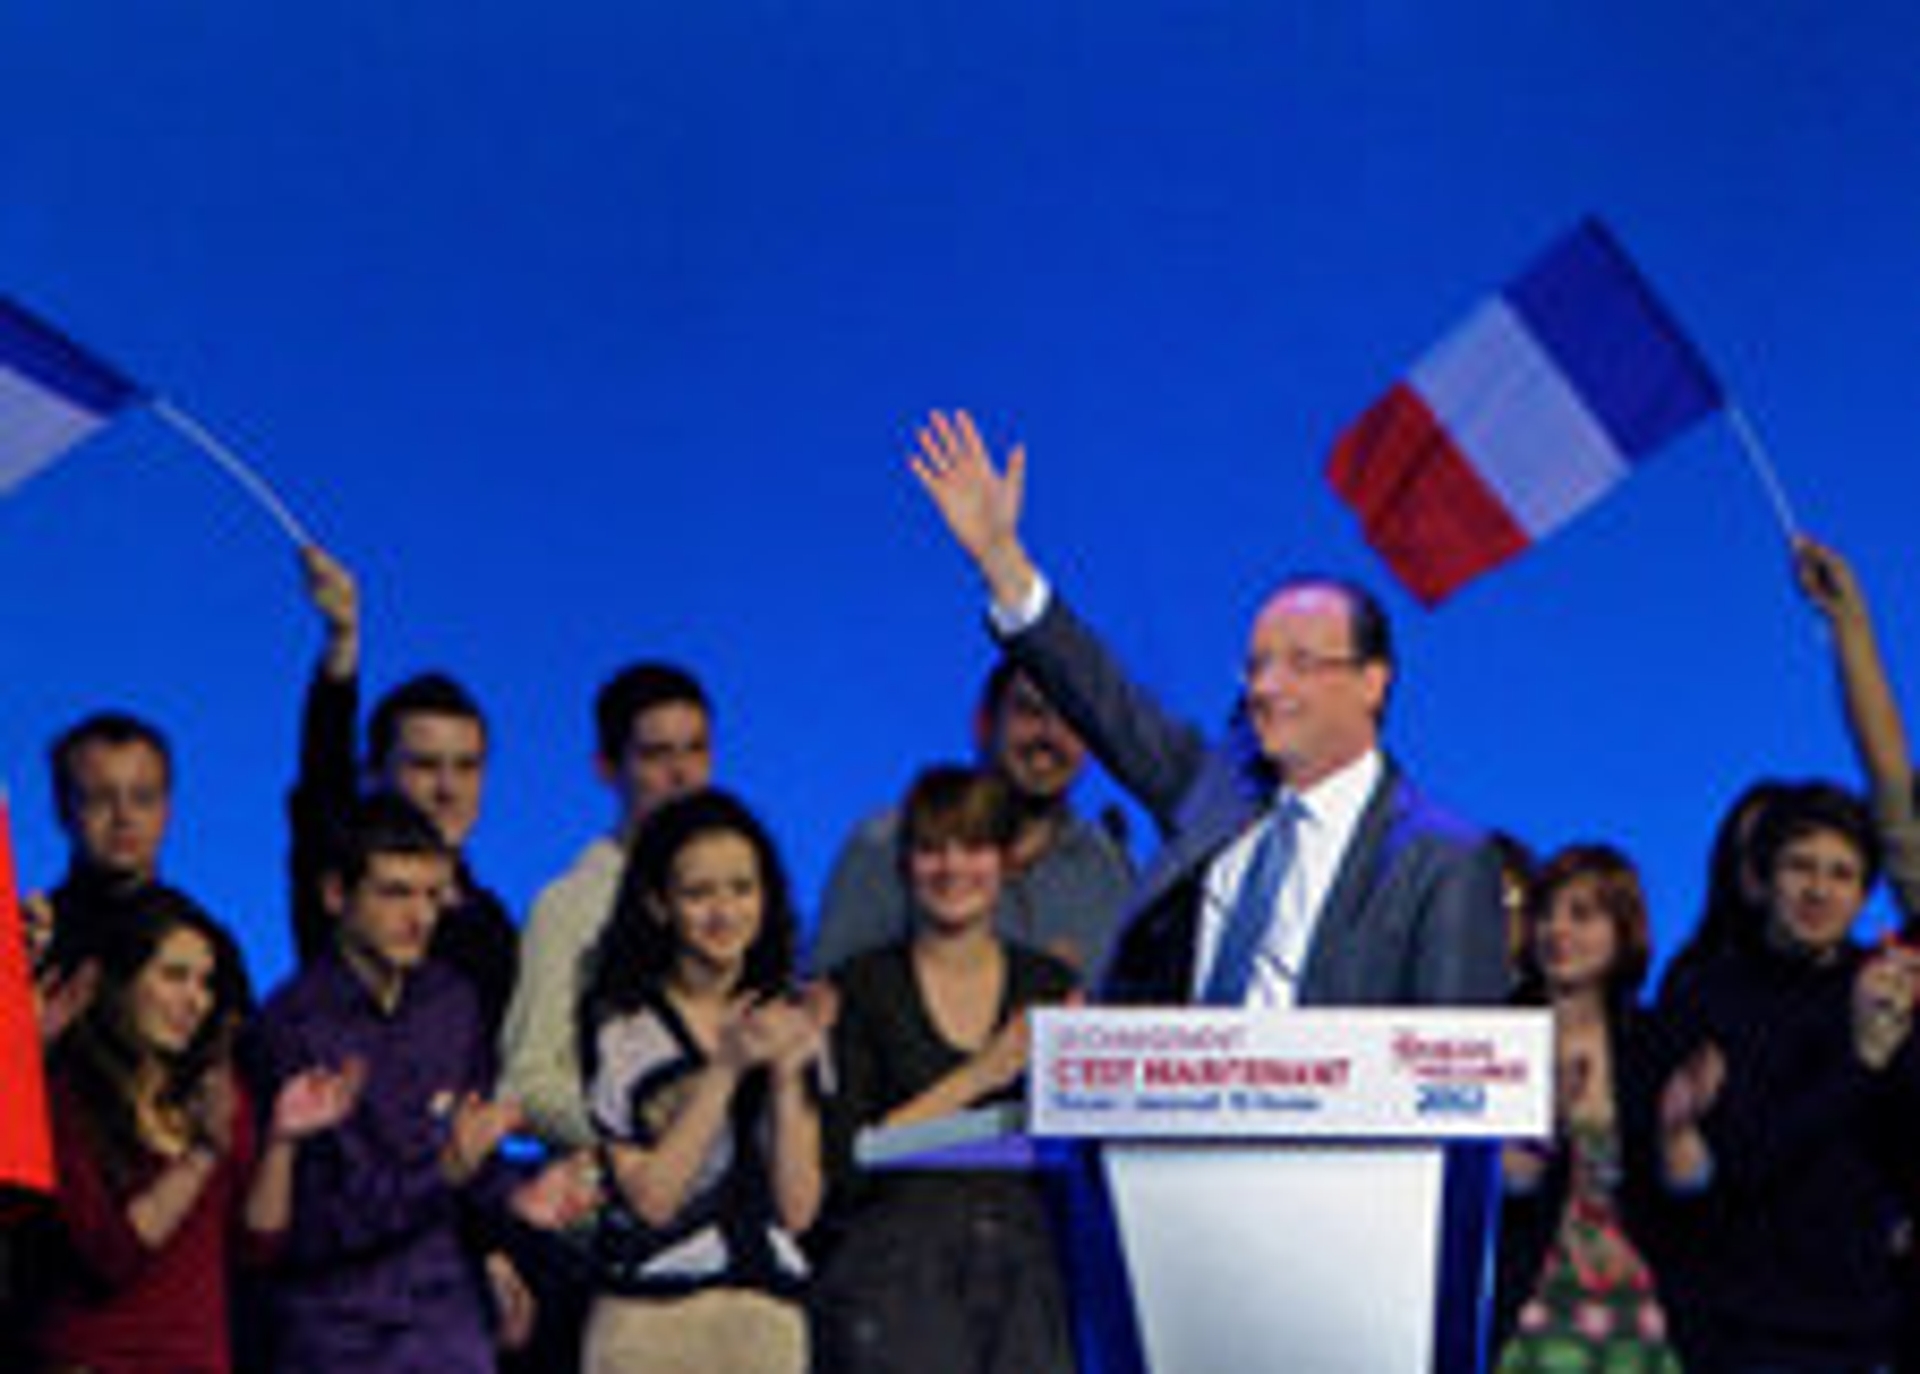 RTEmagicC_Flickr_Hollande_PartiSocialiste_300.jpg